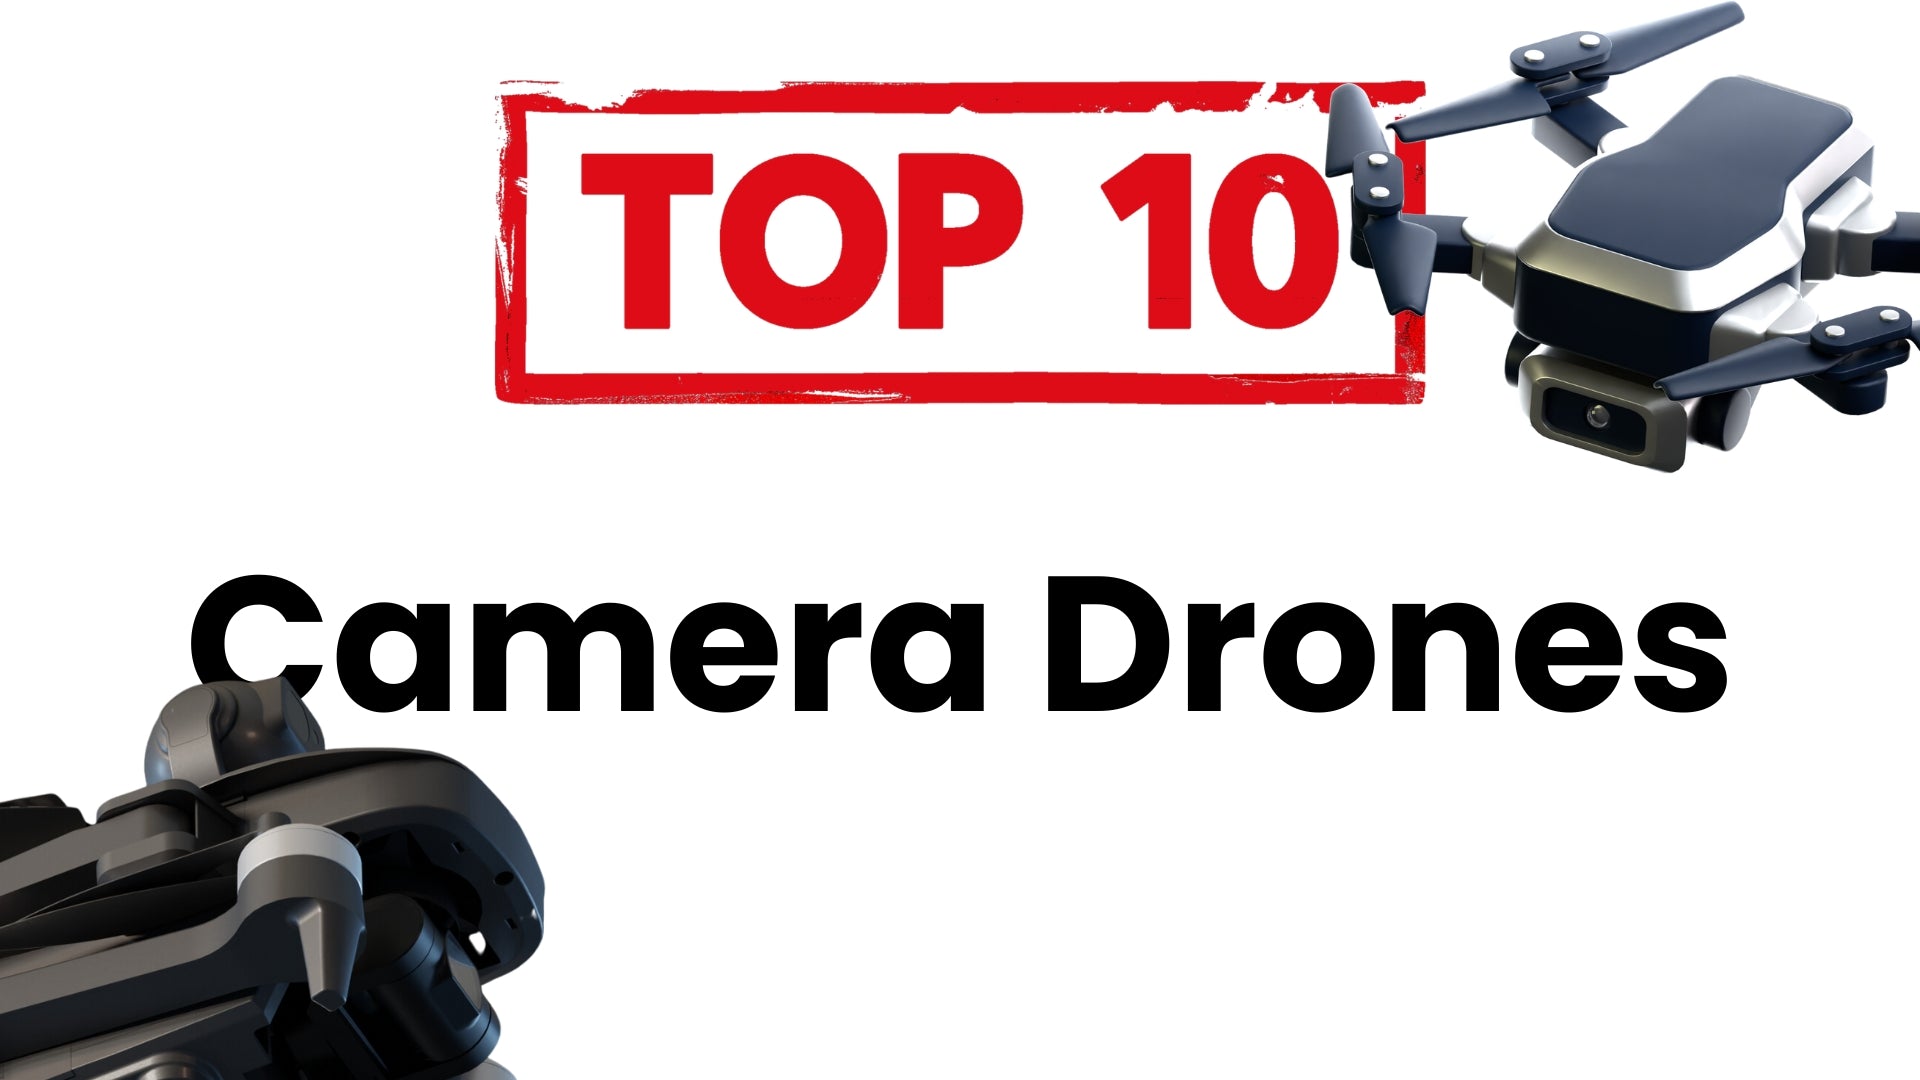 Top 10 drones with Camera